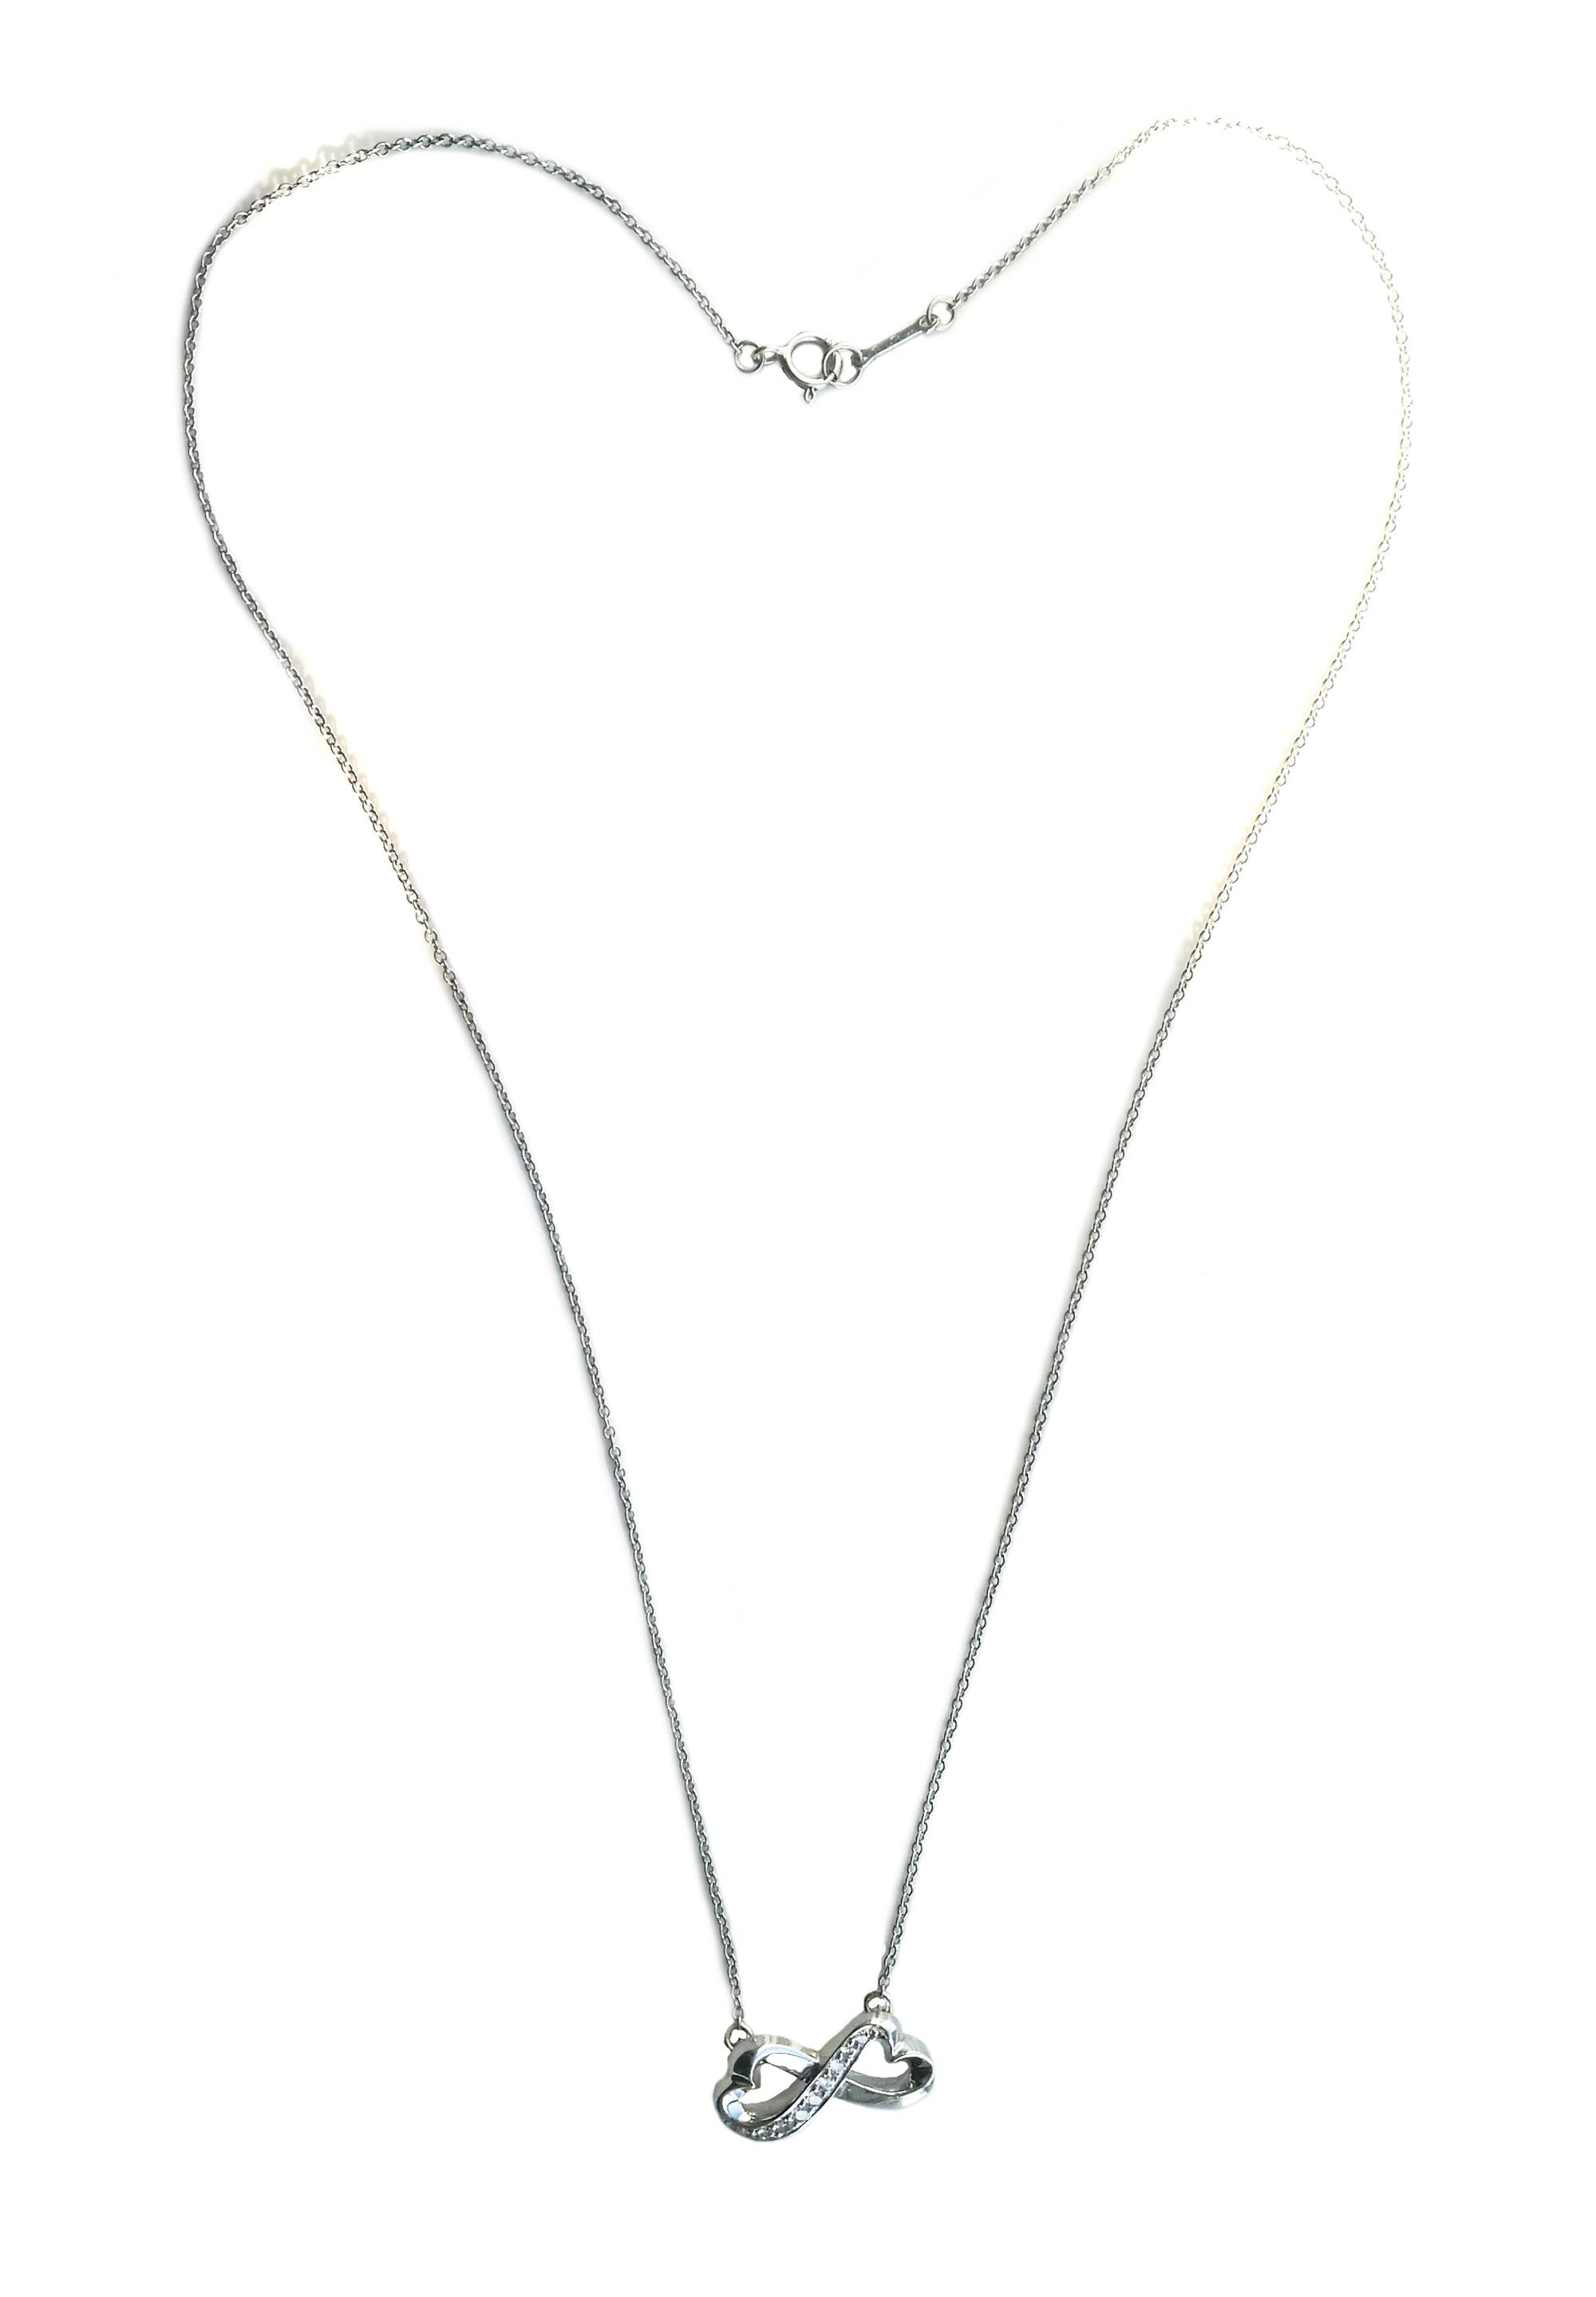 Tiffany & Co Paloma Picasso 18k White Gold Double Diamond Loving Hearts Necklace